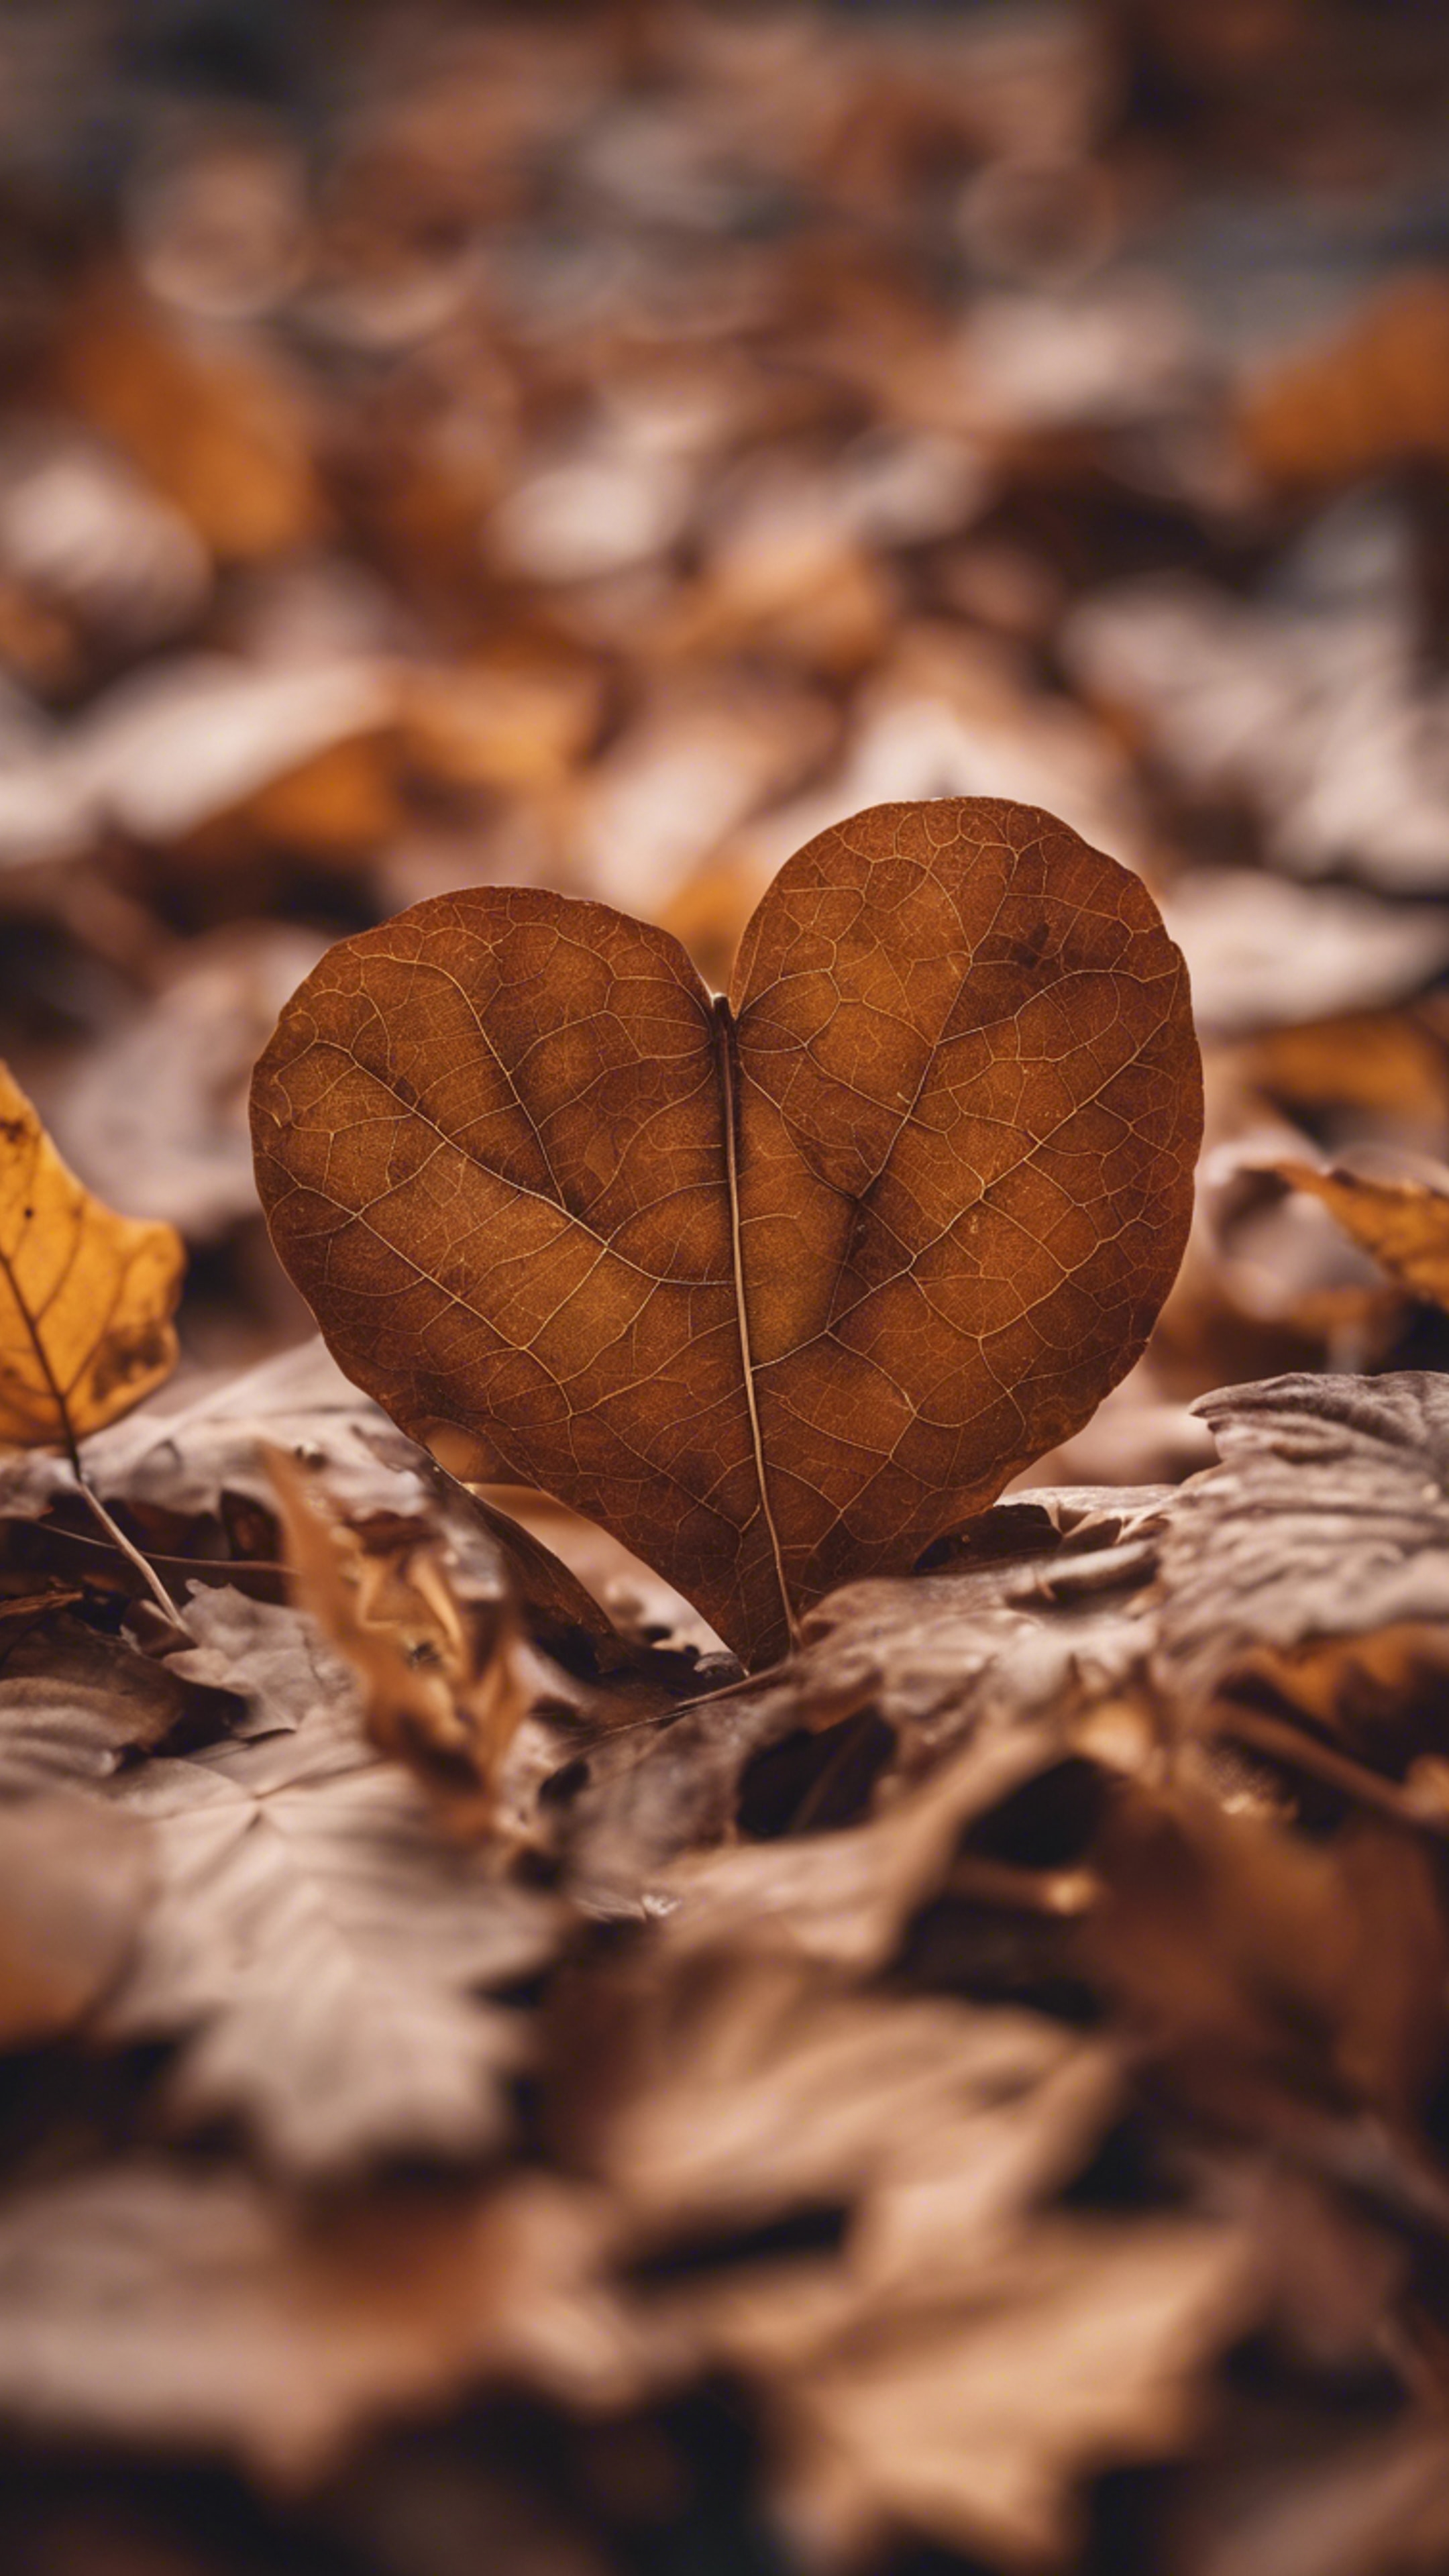 A beautiful heart-shaped brown leaf amidst the fallen autumn leaves.壁紙[9473d5abdc8f40ccae98]